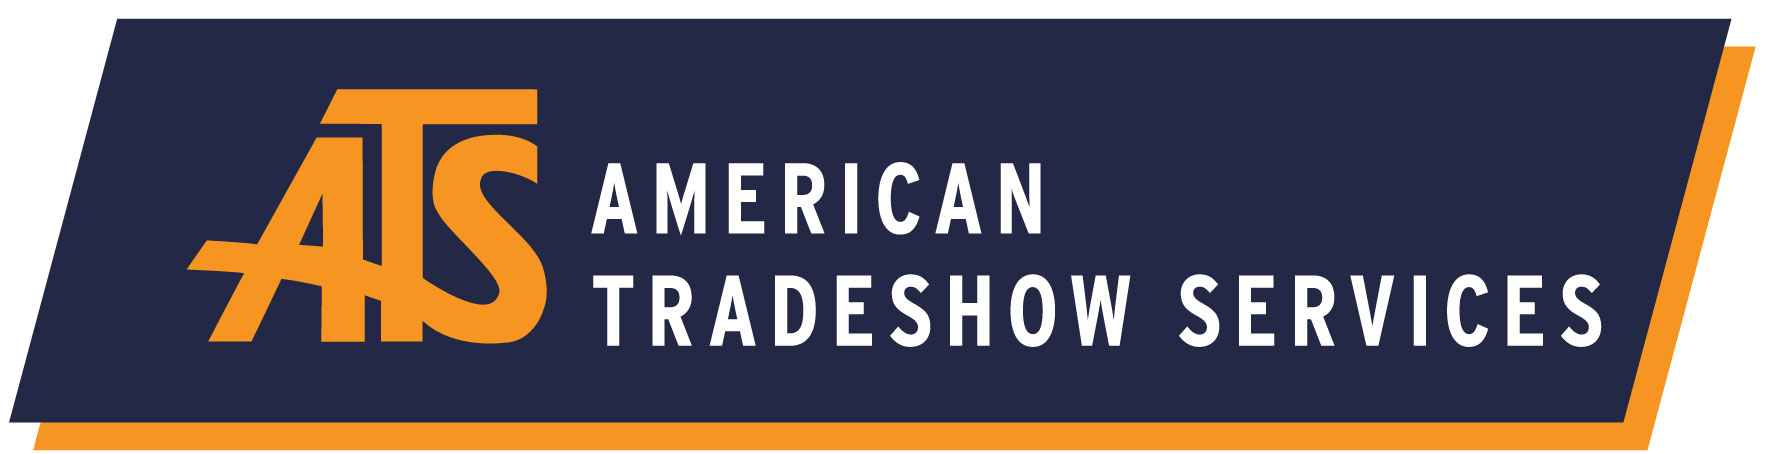 American Tradeshow logo.